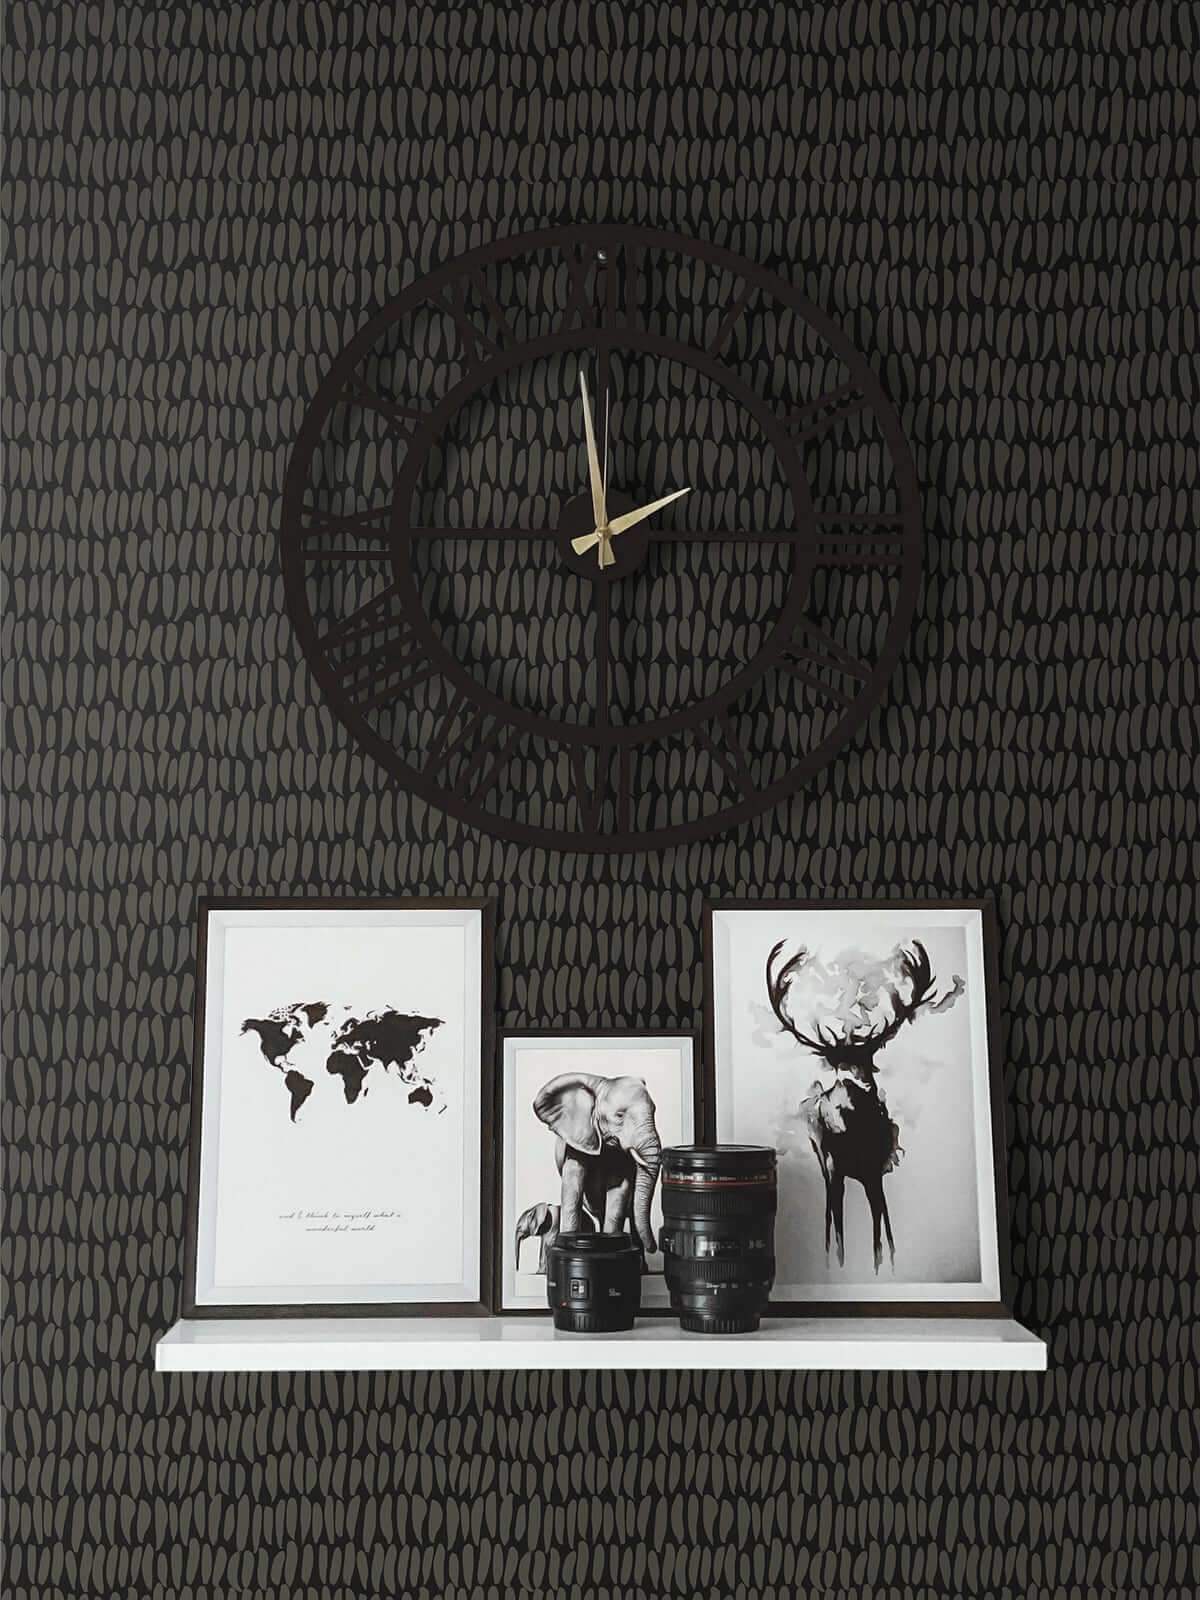 Seabrook Designs The Simple Life Brushwork Wallpaper - Graphite